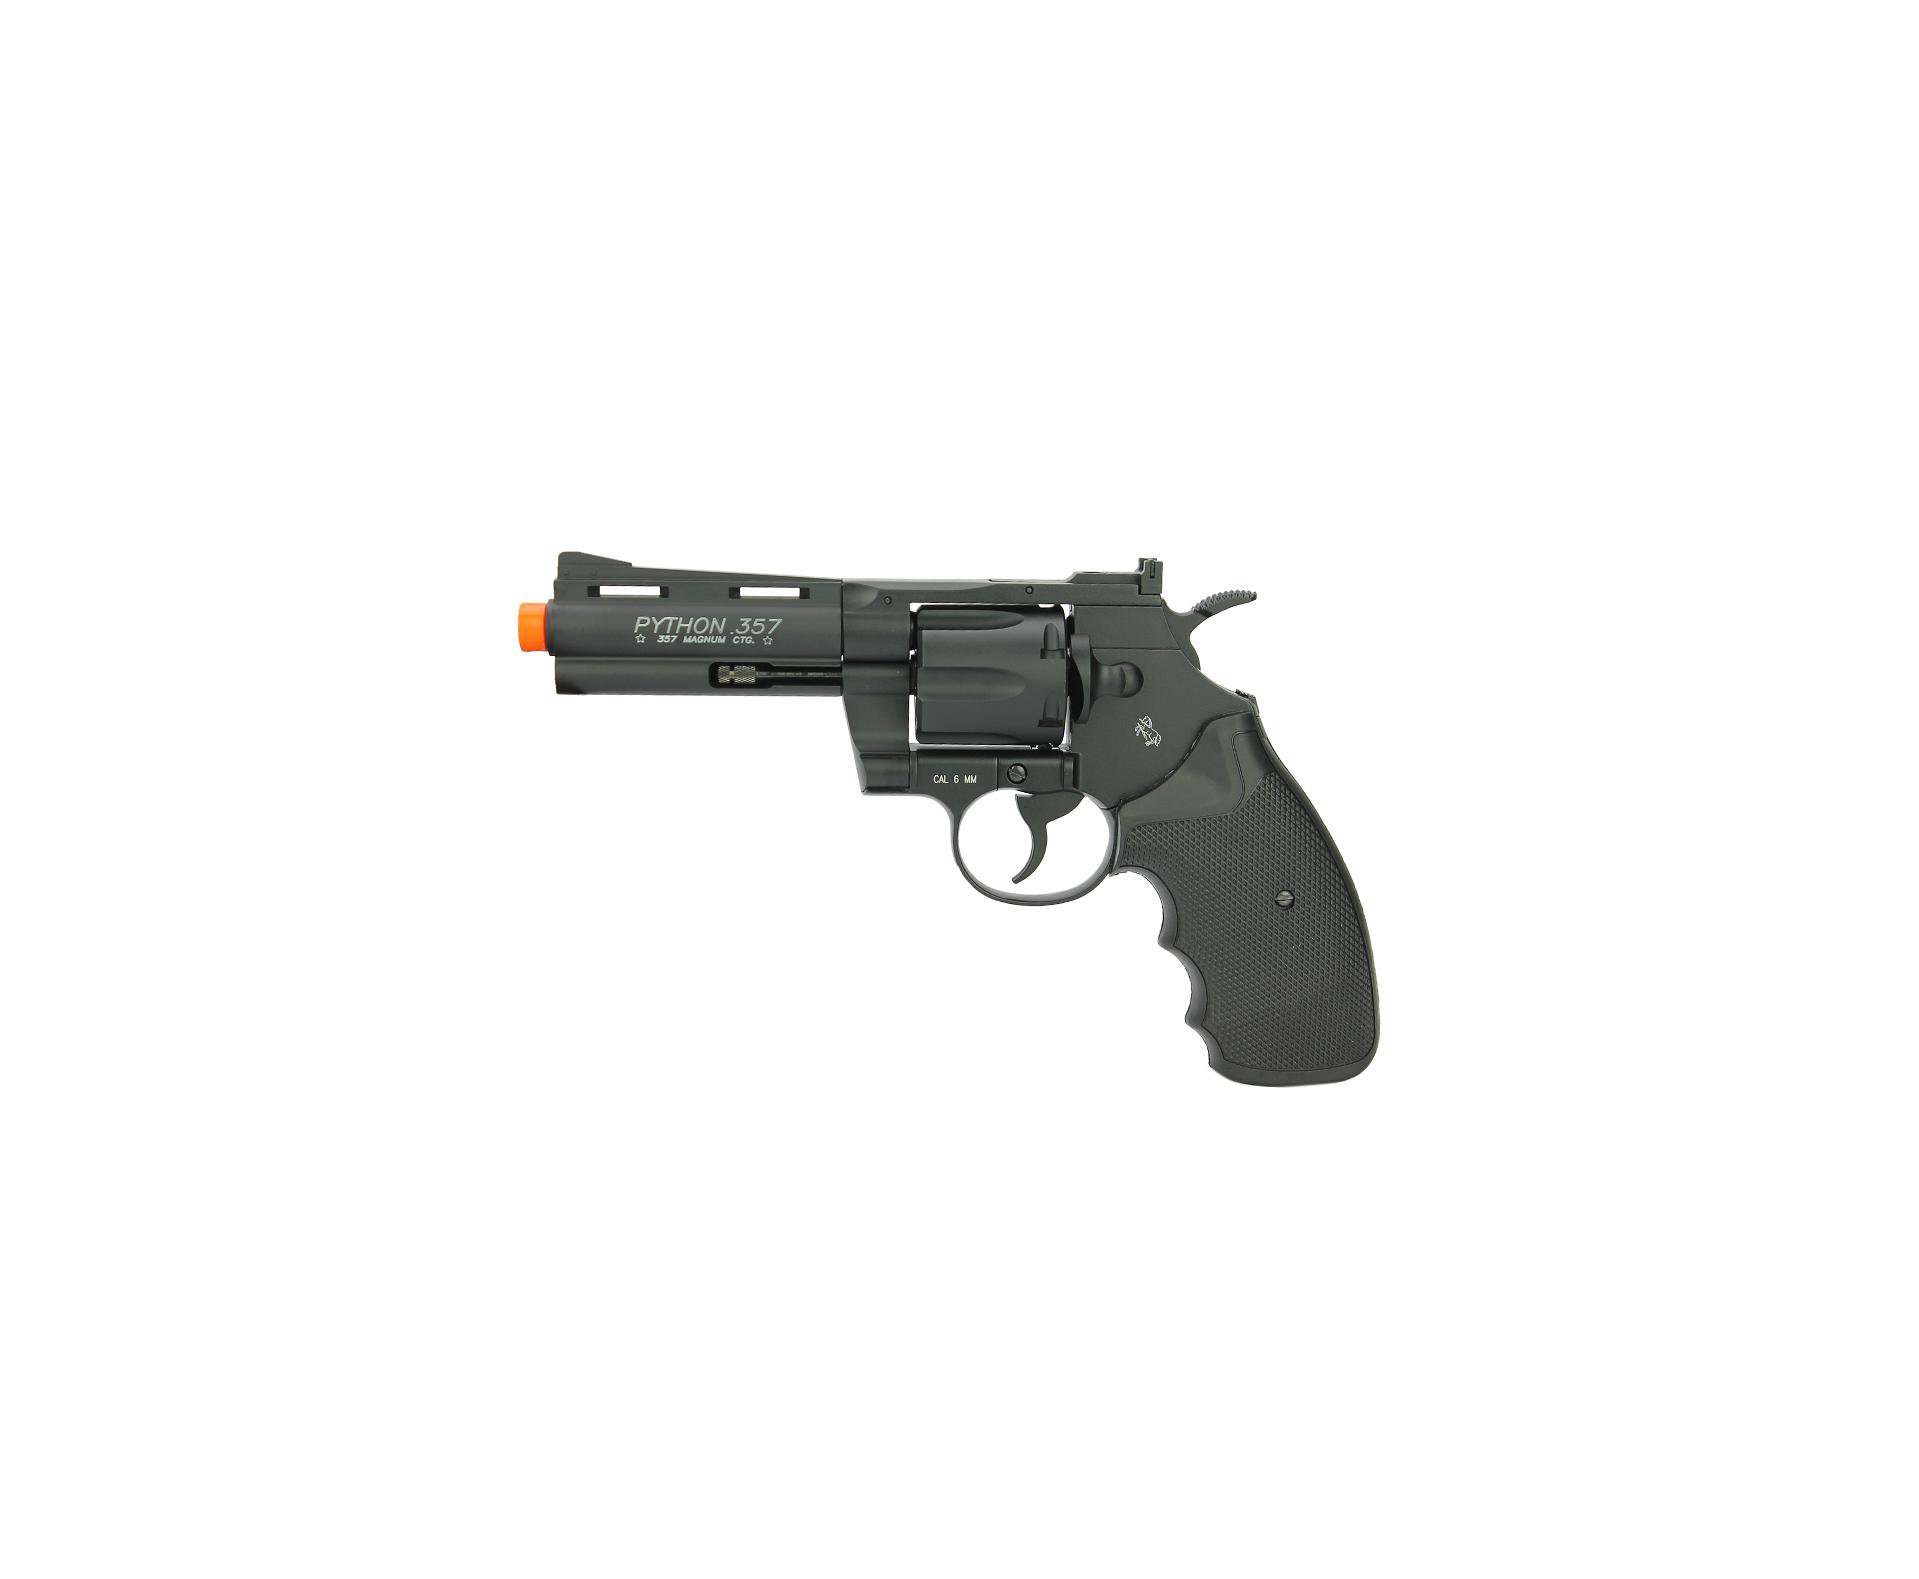 Revolver De Airsoft Co2 Colt Python 357 4 Pol Full Metal Cal 6,0mm